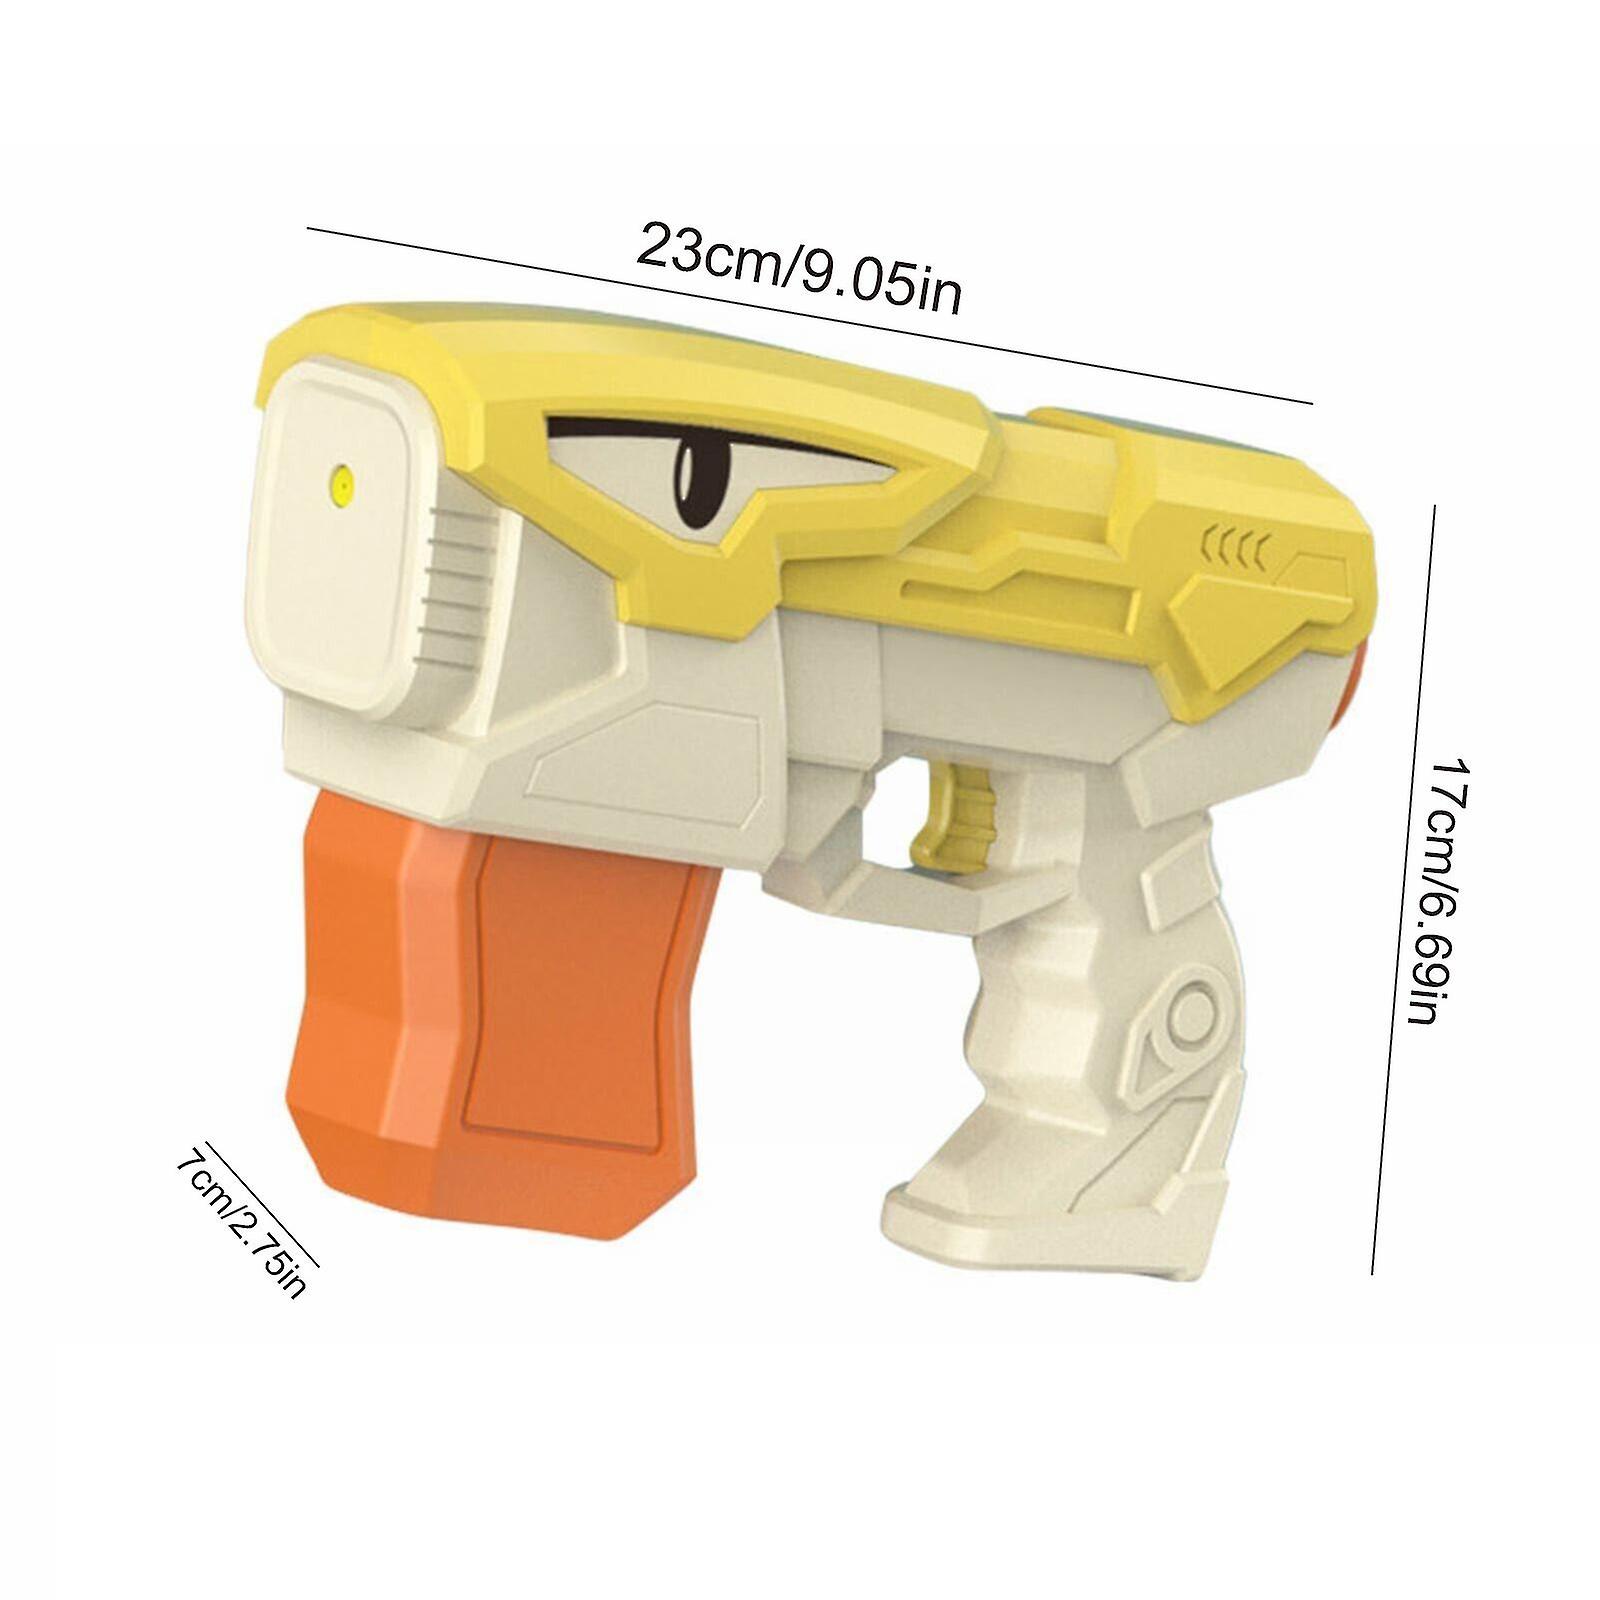 Auto Squirt Guns Water Gun With Battery Powered Automatic Burst Water Blaster Pistol For Boy Girls Gift